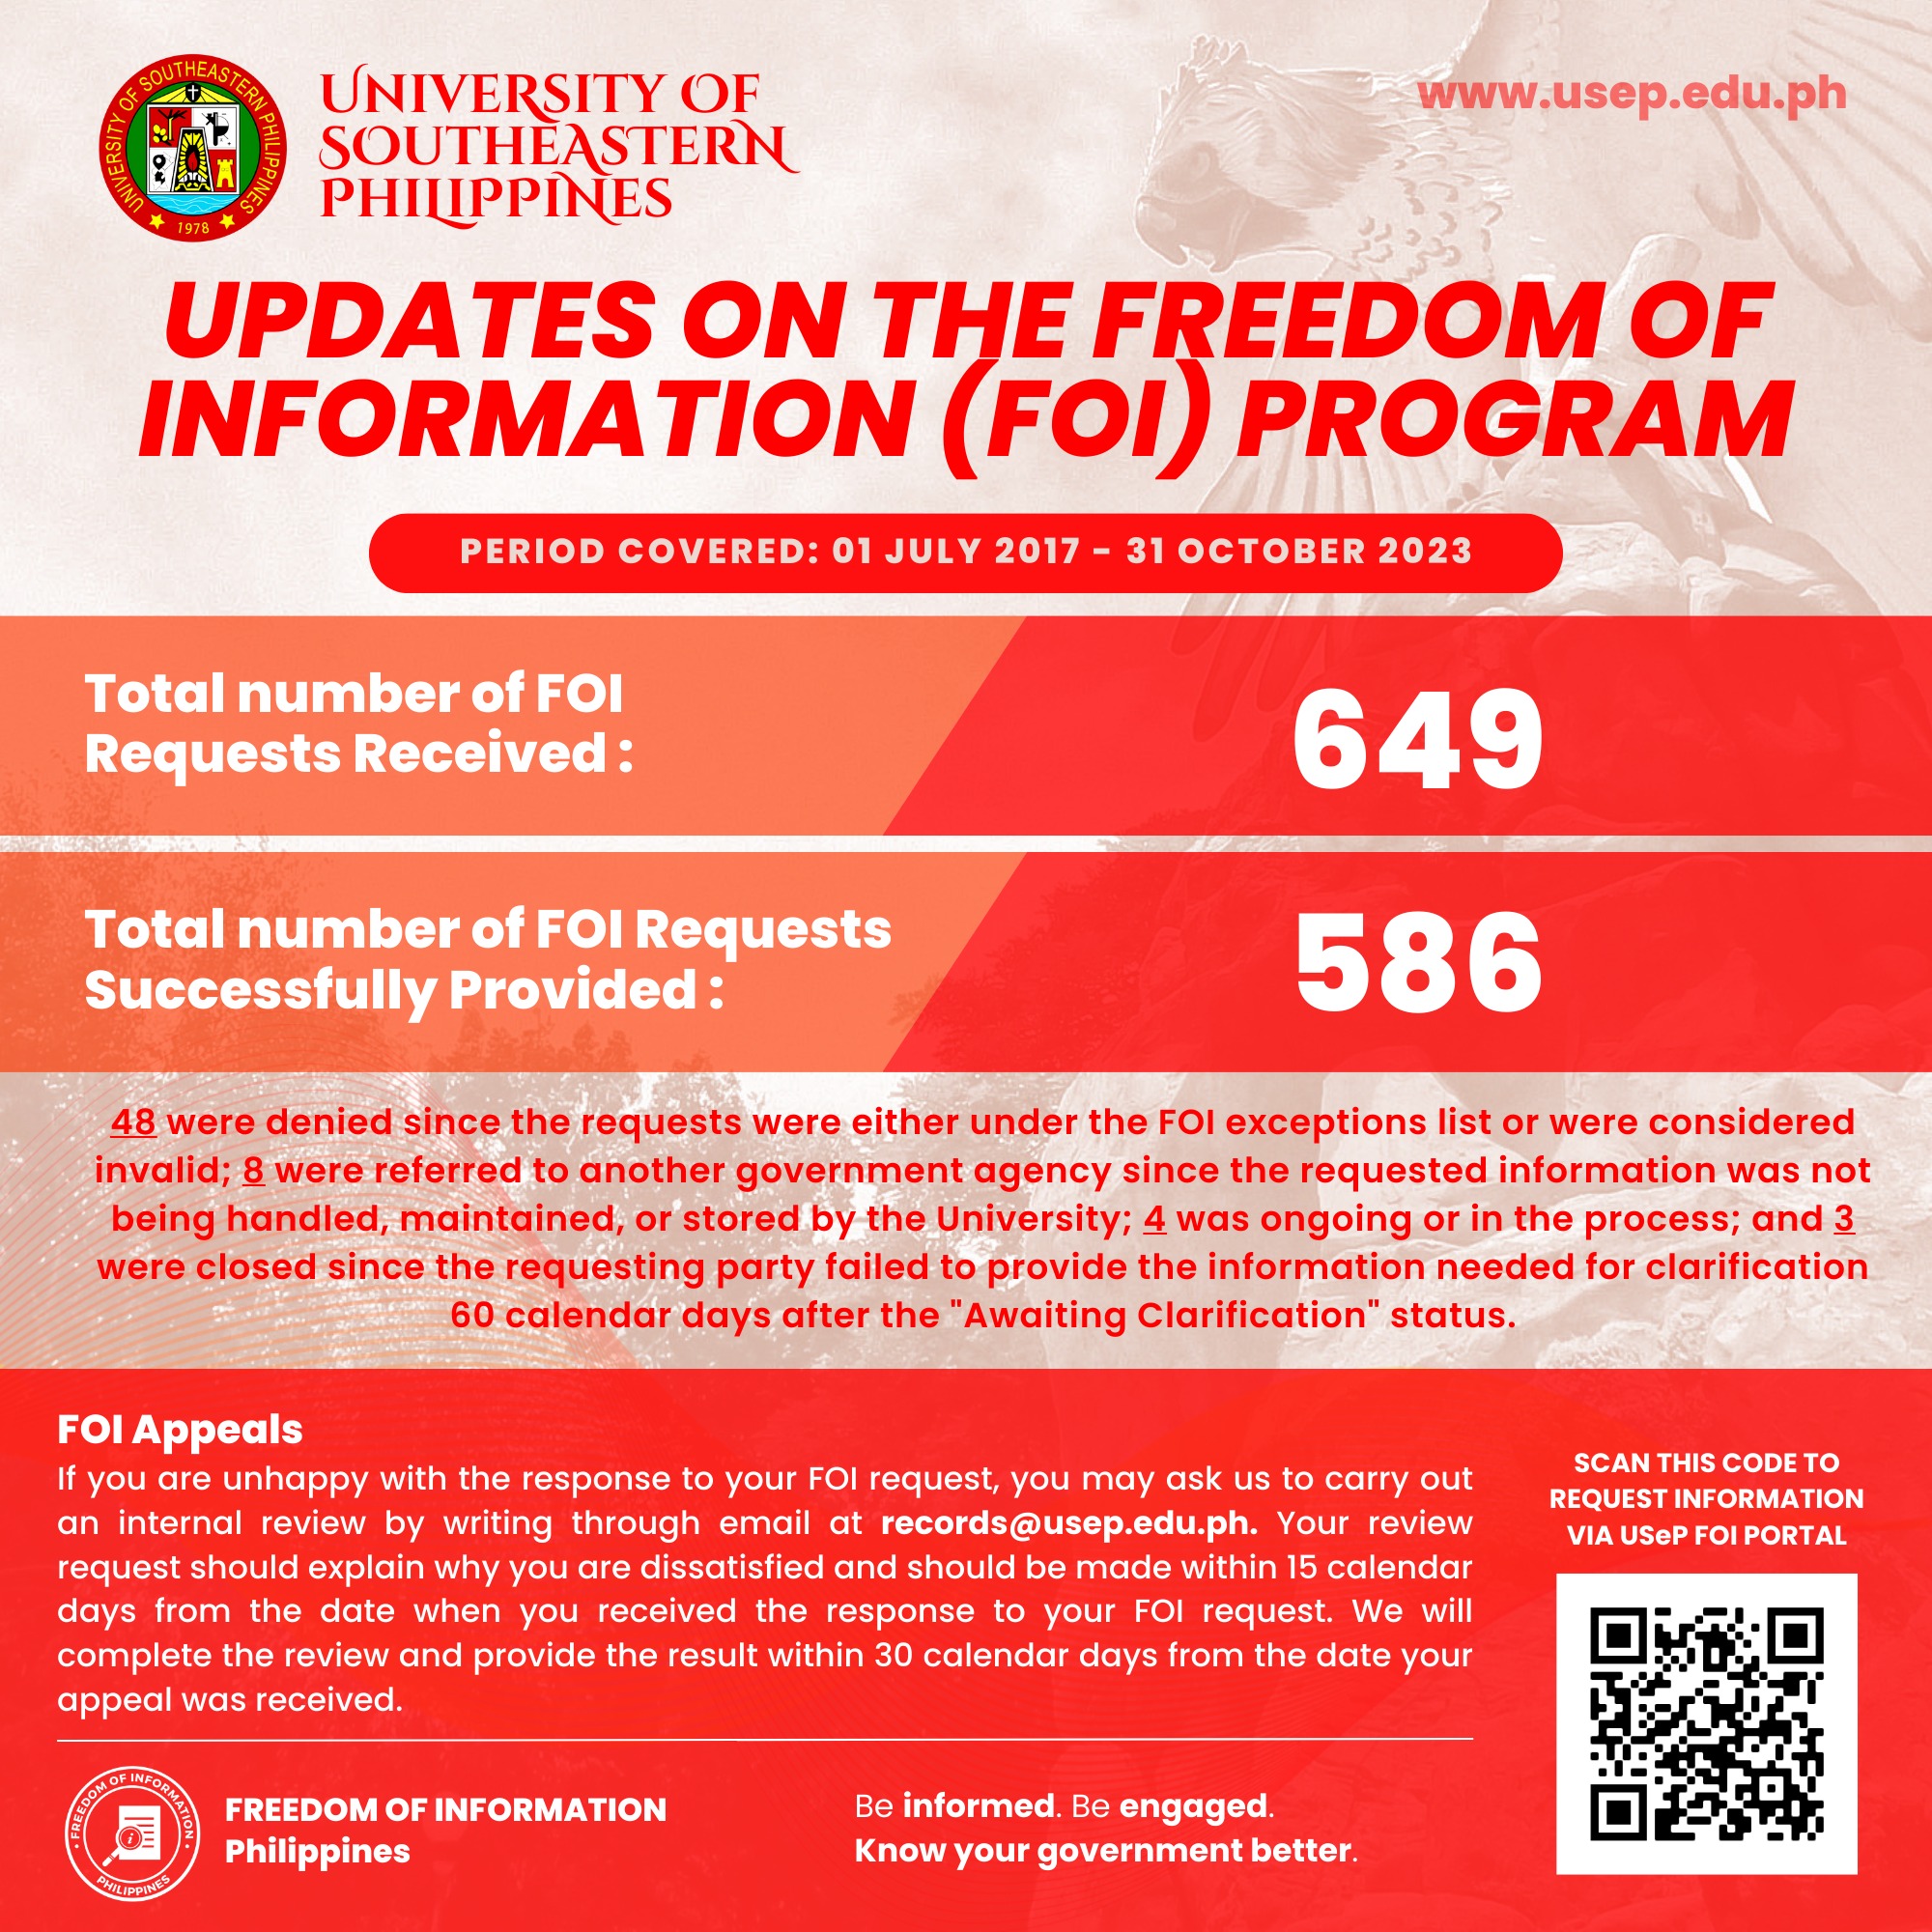 USeP FOI Program update as of October 2023